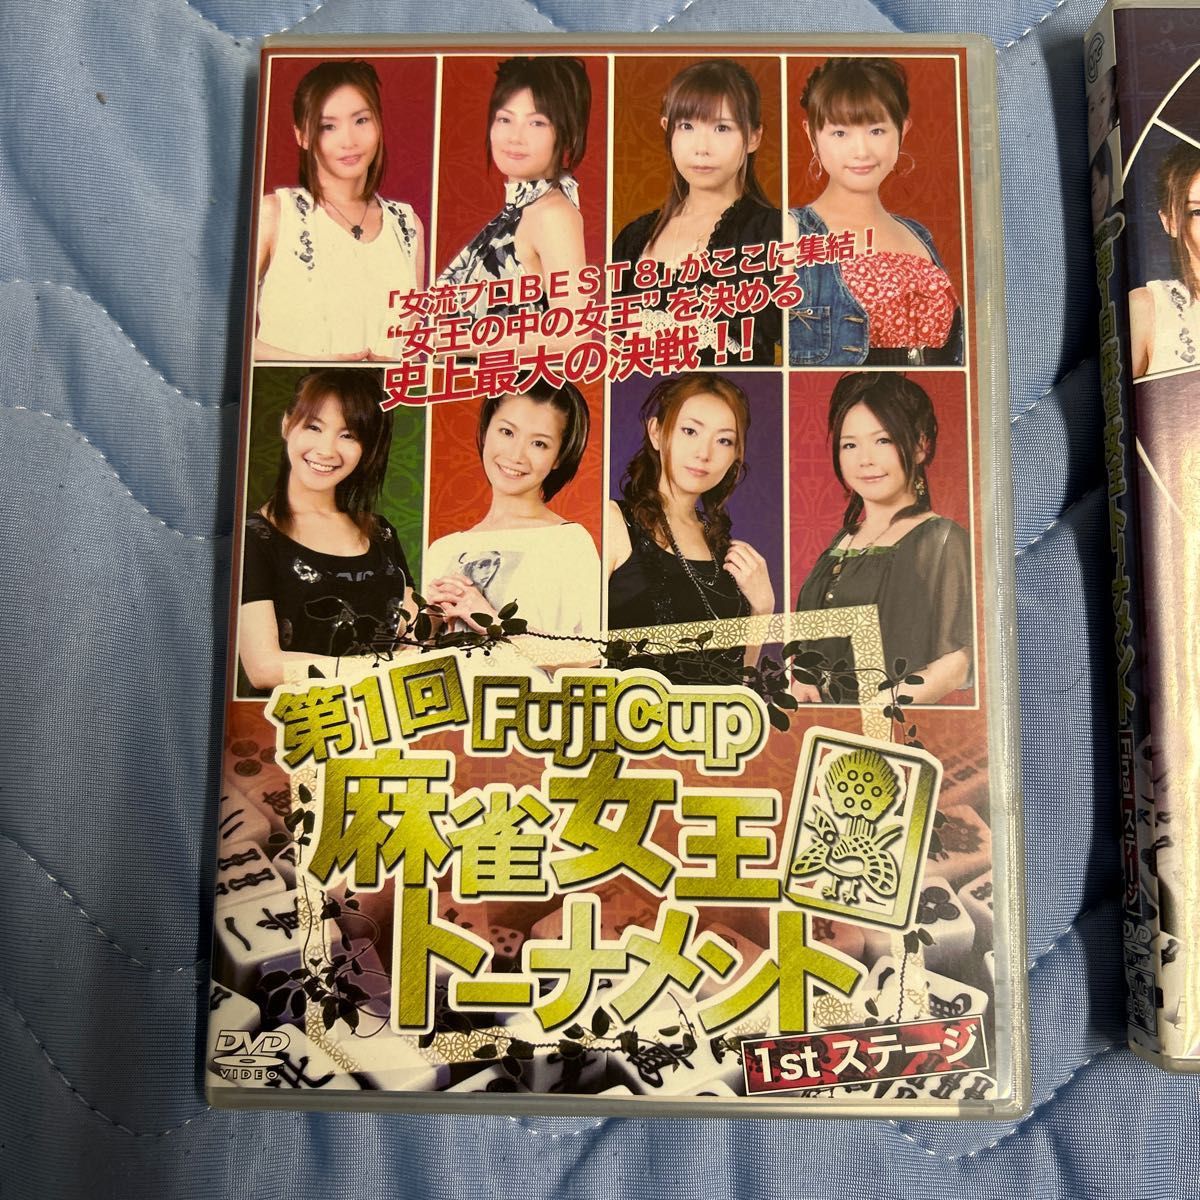 Fuji Cup 第1回麻雀女王トーナメントセット